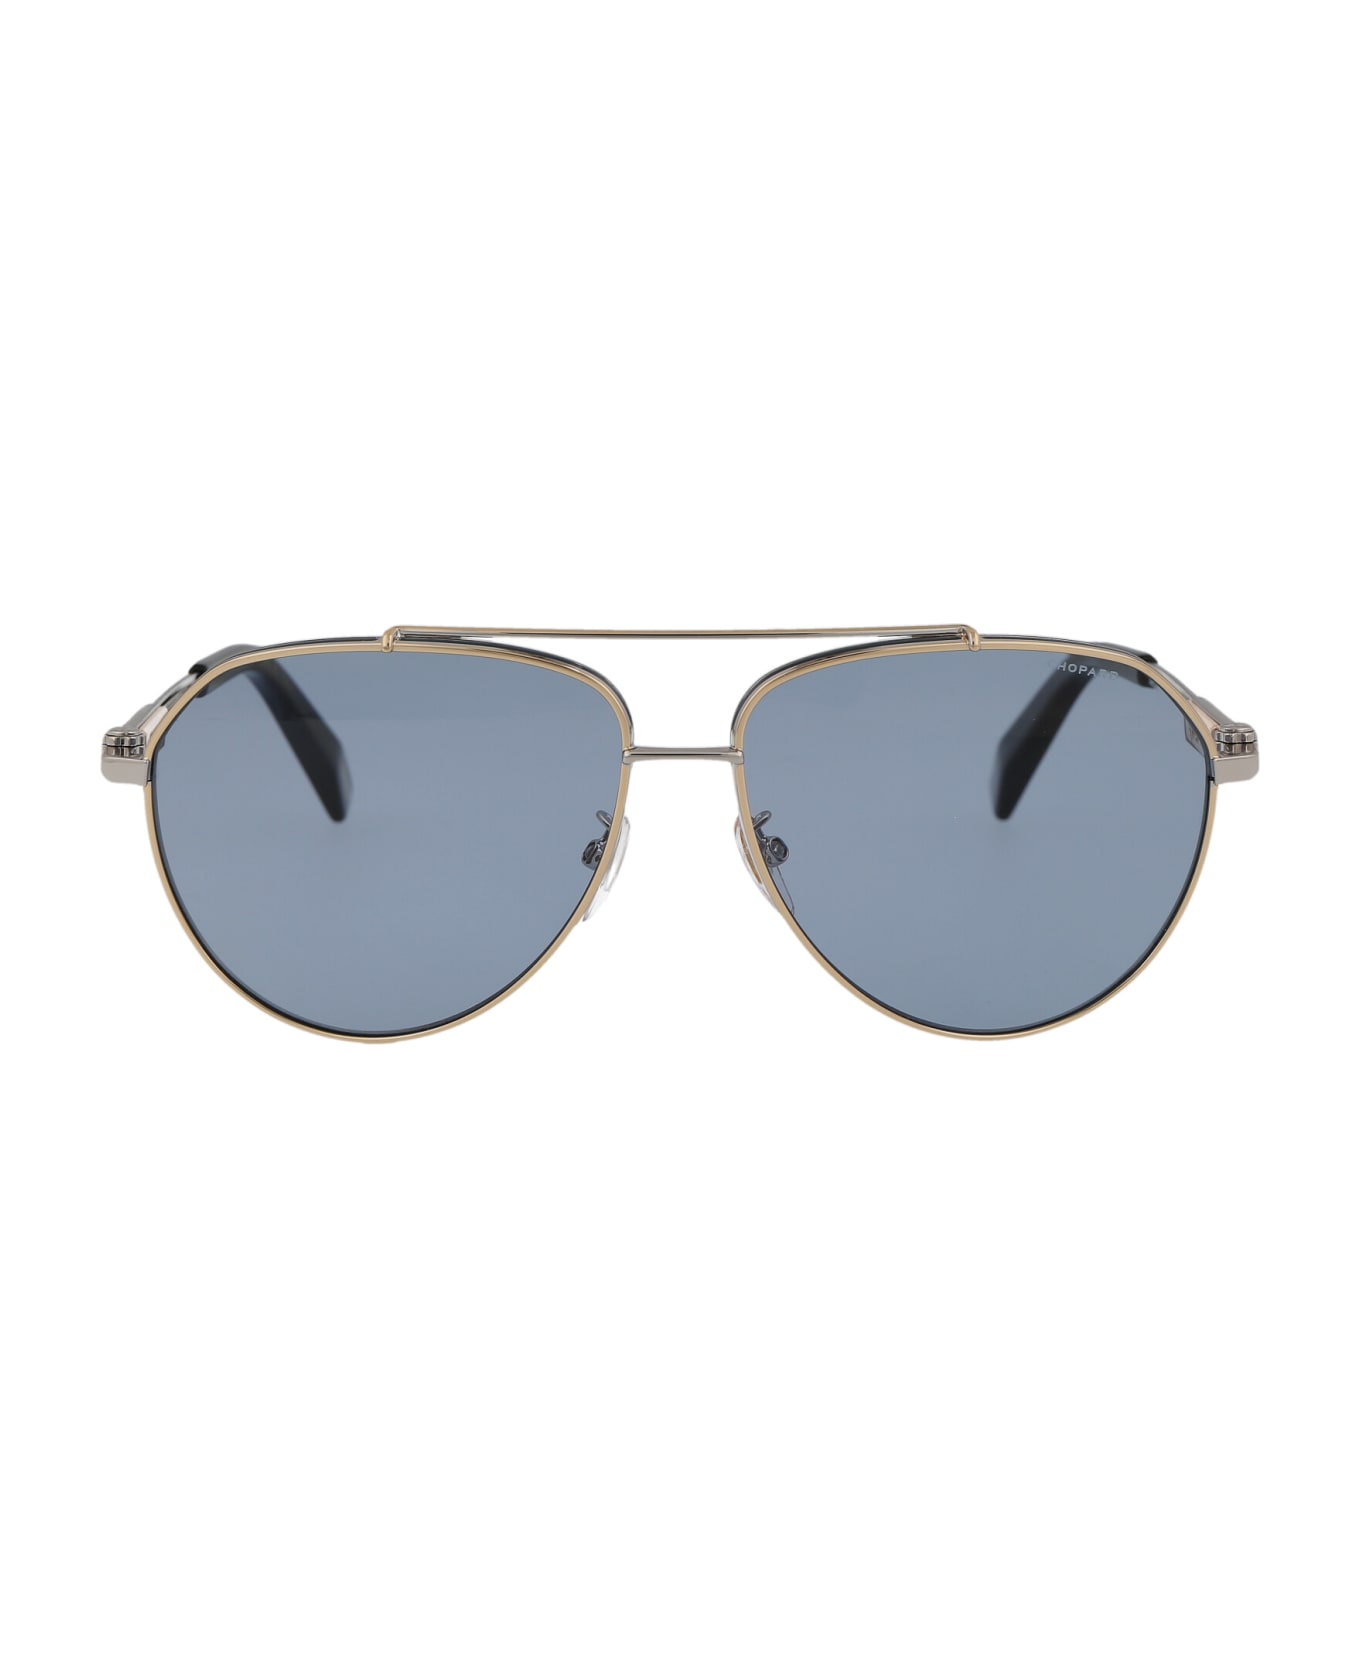 Chopard Schg63 Sunglasses - 340P GOLD C/PARTI PALLADIO LUCIDO